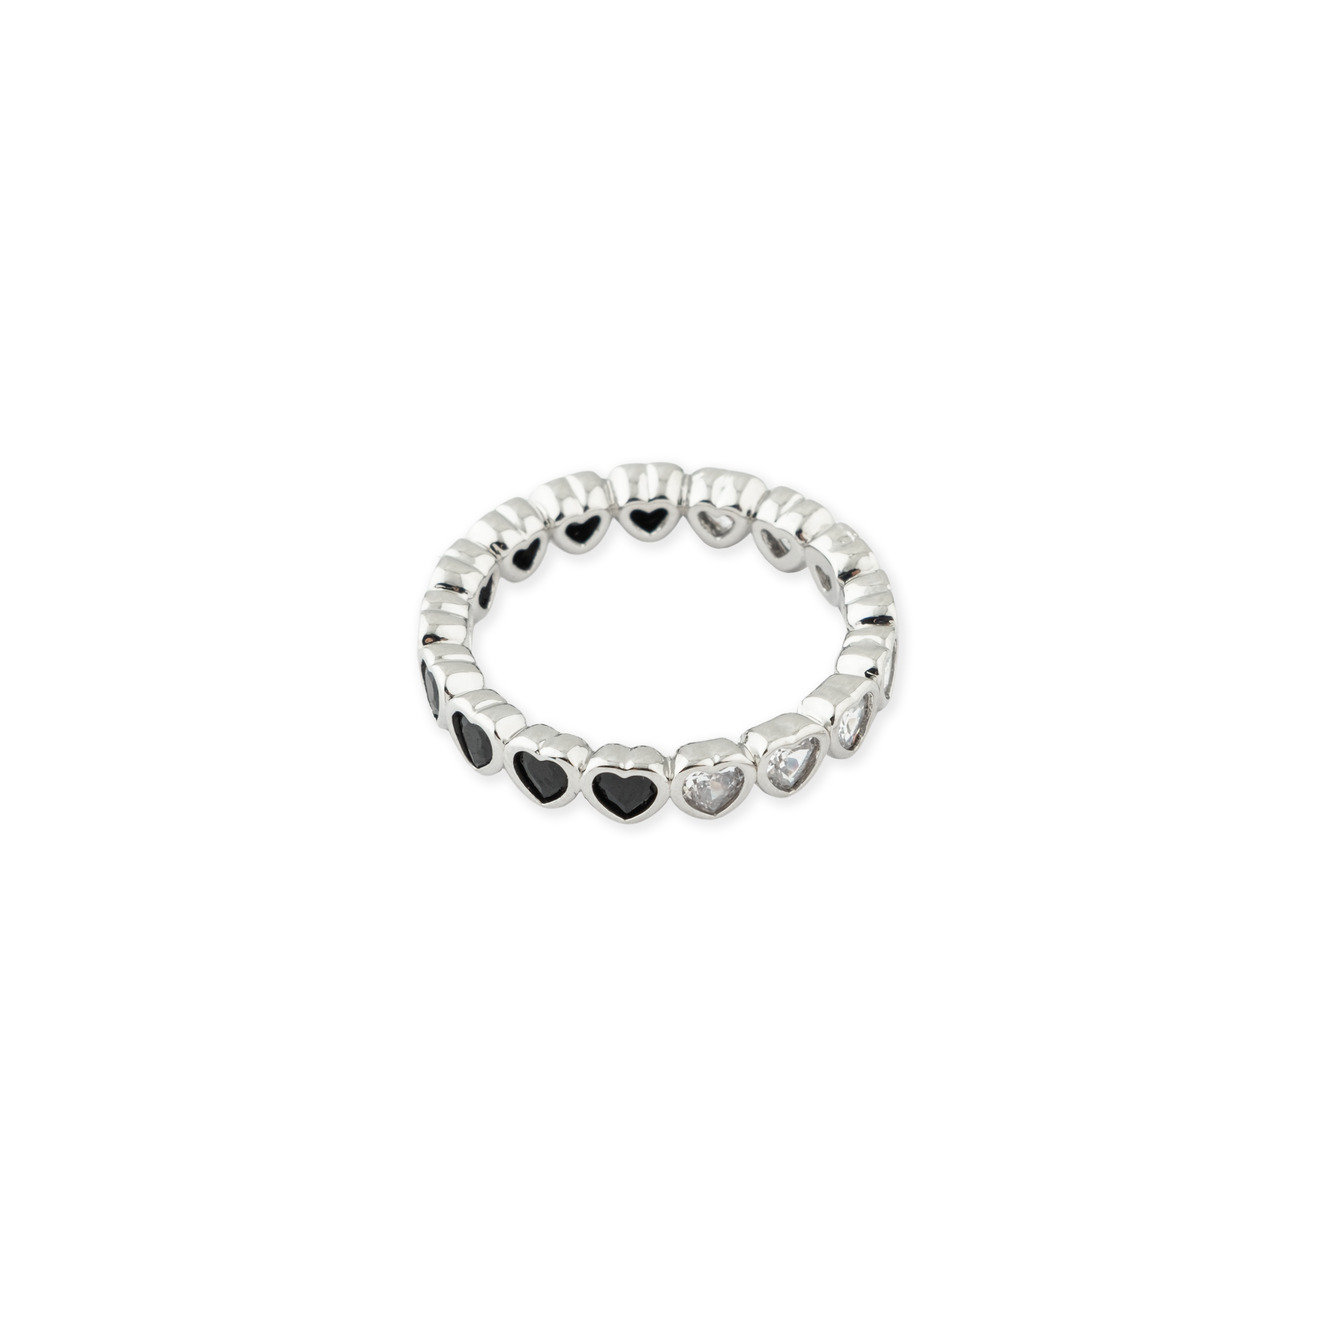 Herald Percy Серебристое кольцо из сердец с белыми и черными кристаллами herald percy серебристое кольцо из сердец с белыми и зелеными кристаллами